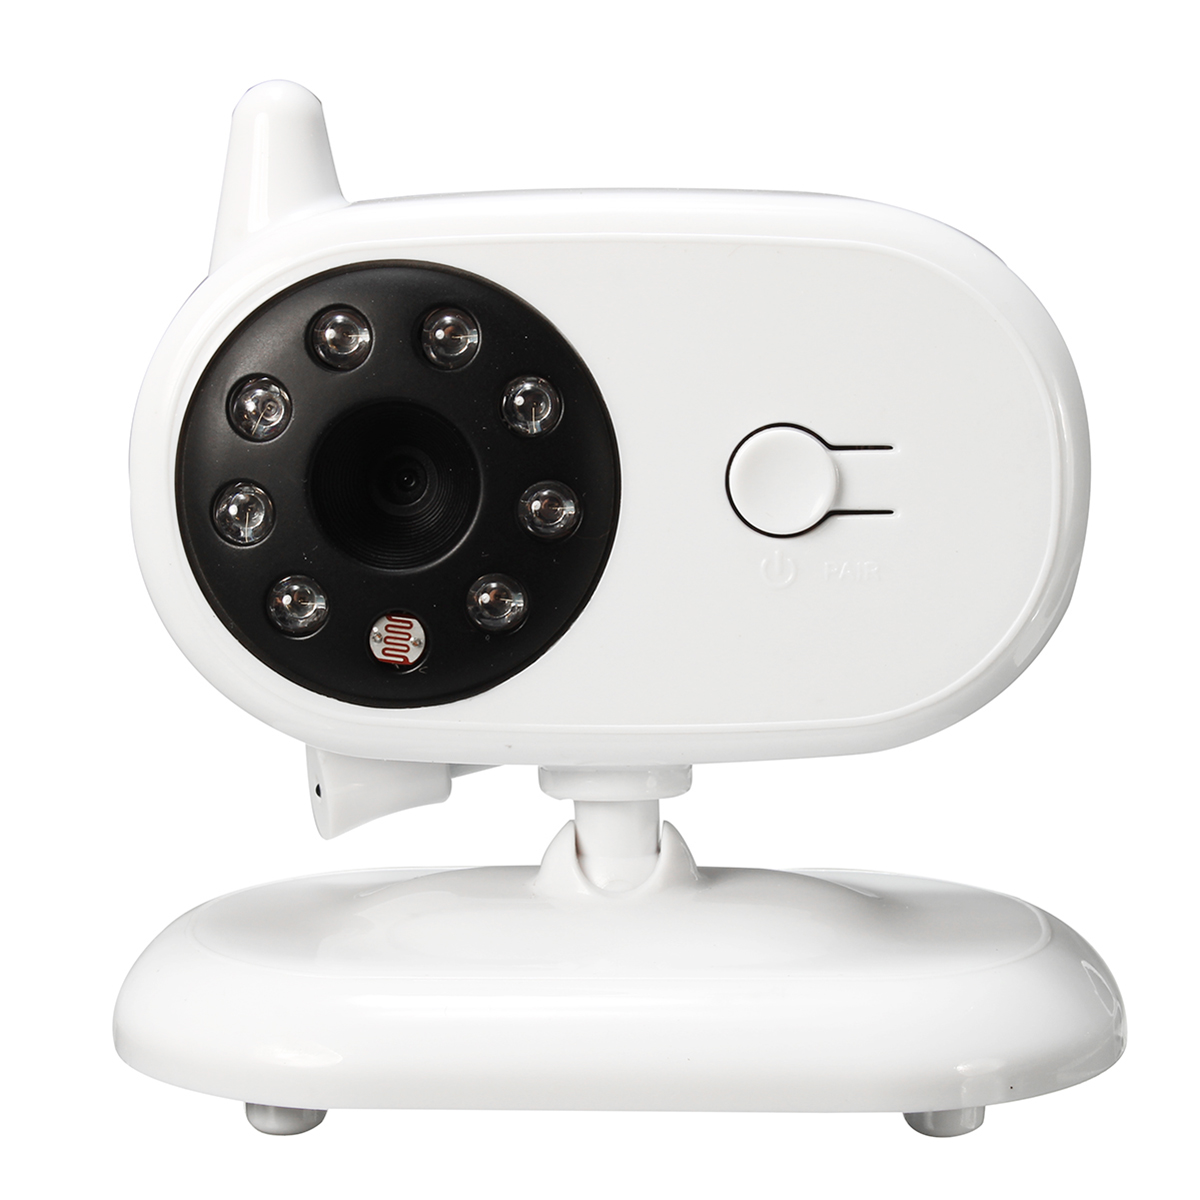 2.4G Wireless Digital 3.5 inch LCD Baby Monitor Camera Audio Talk Video Night Vision 20